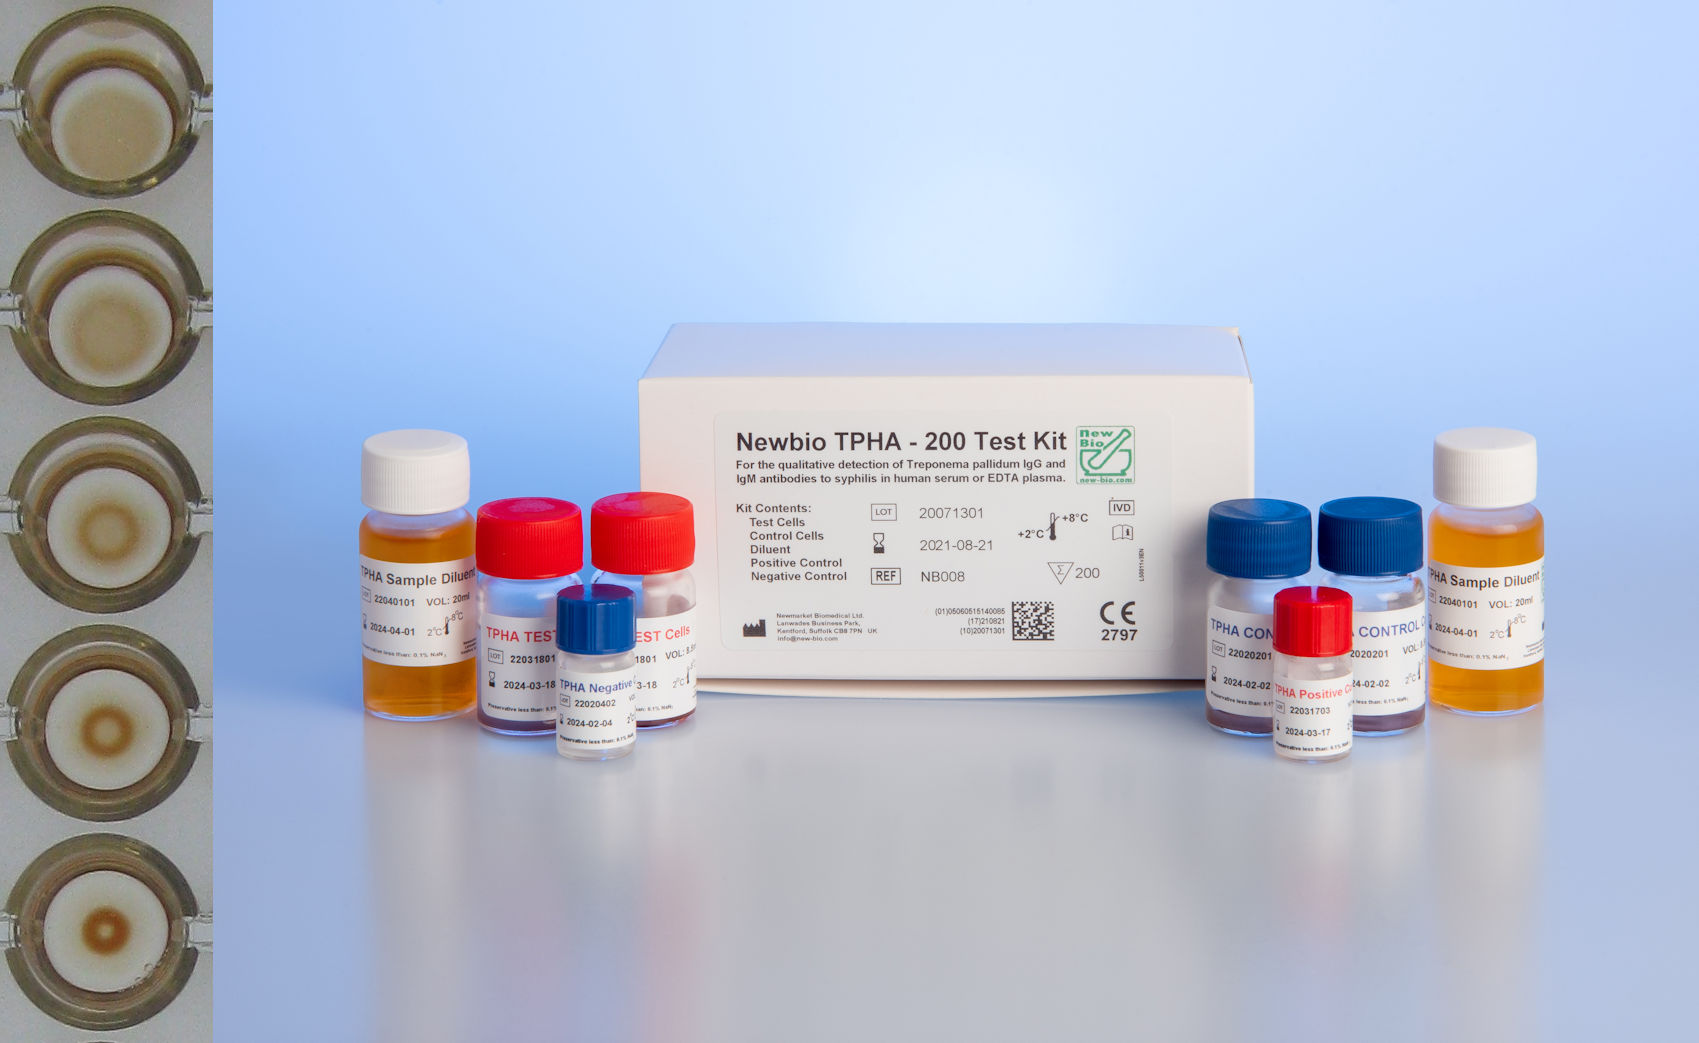 Treponema Pallidum Haemagglutination Blood Test Kits for the serodiagnosis of Syphilis